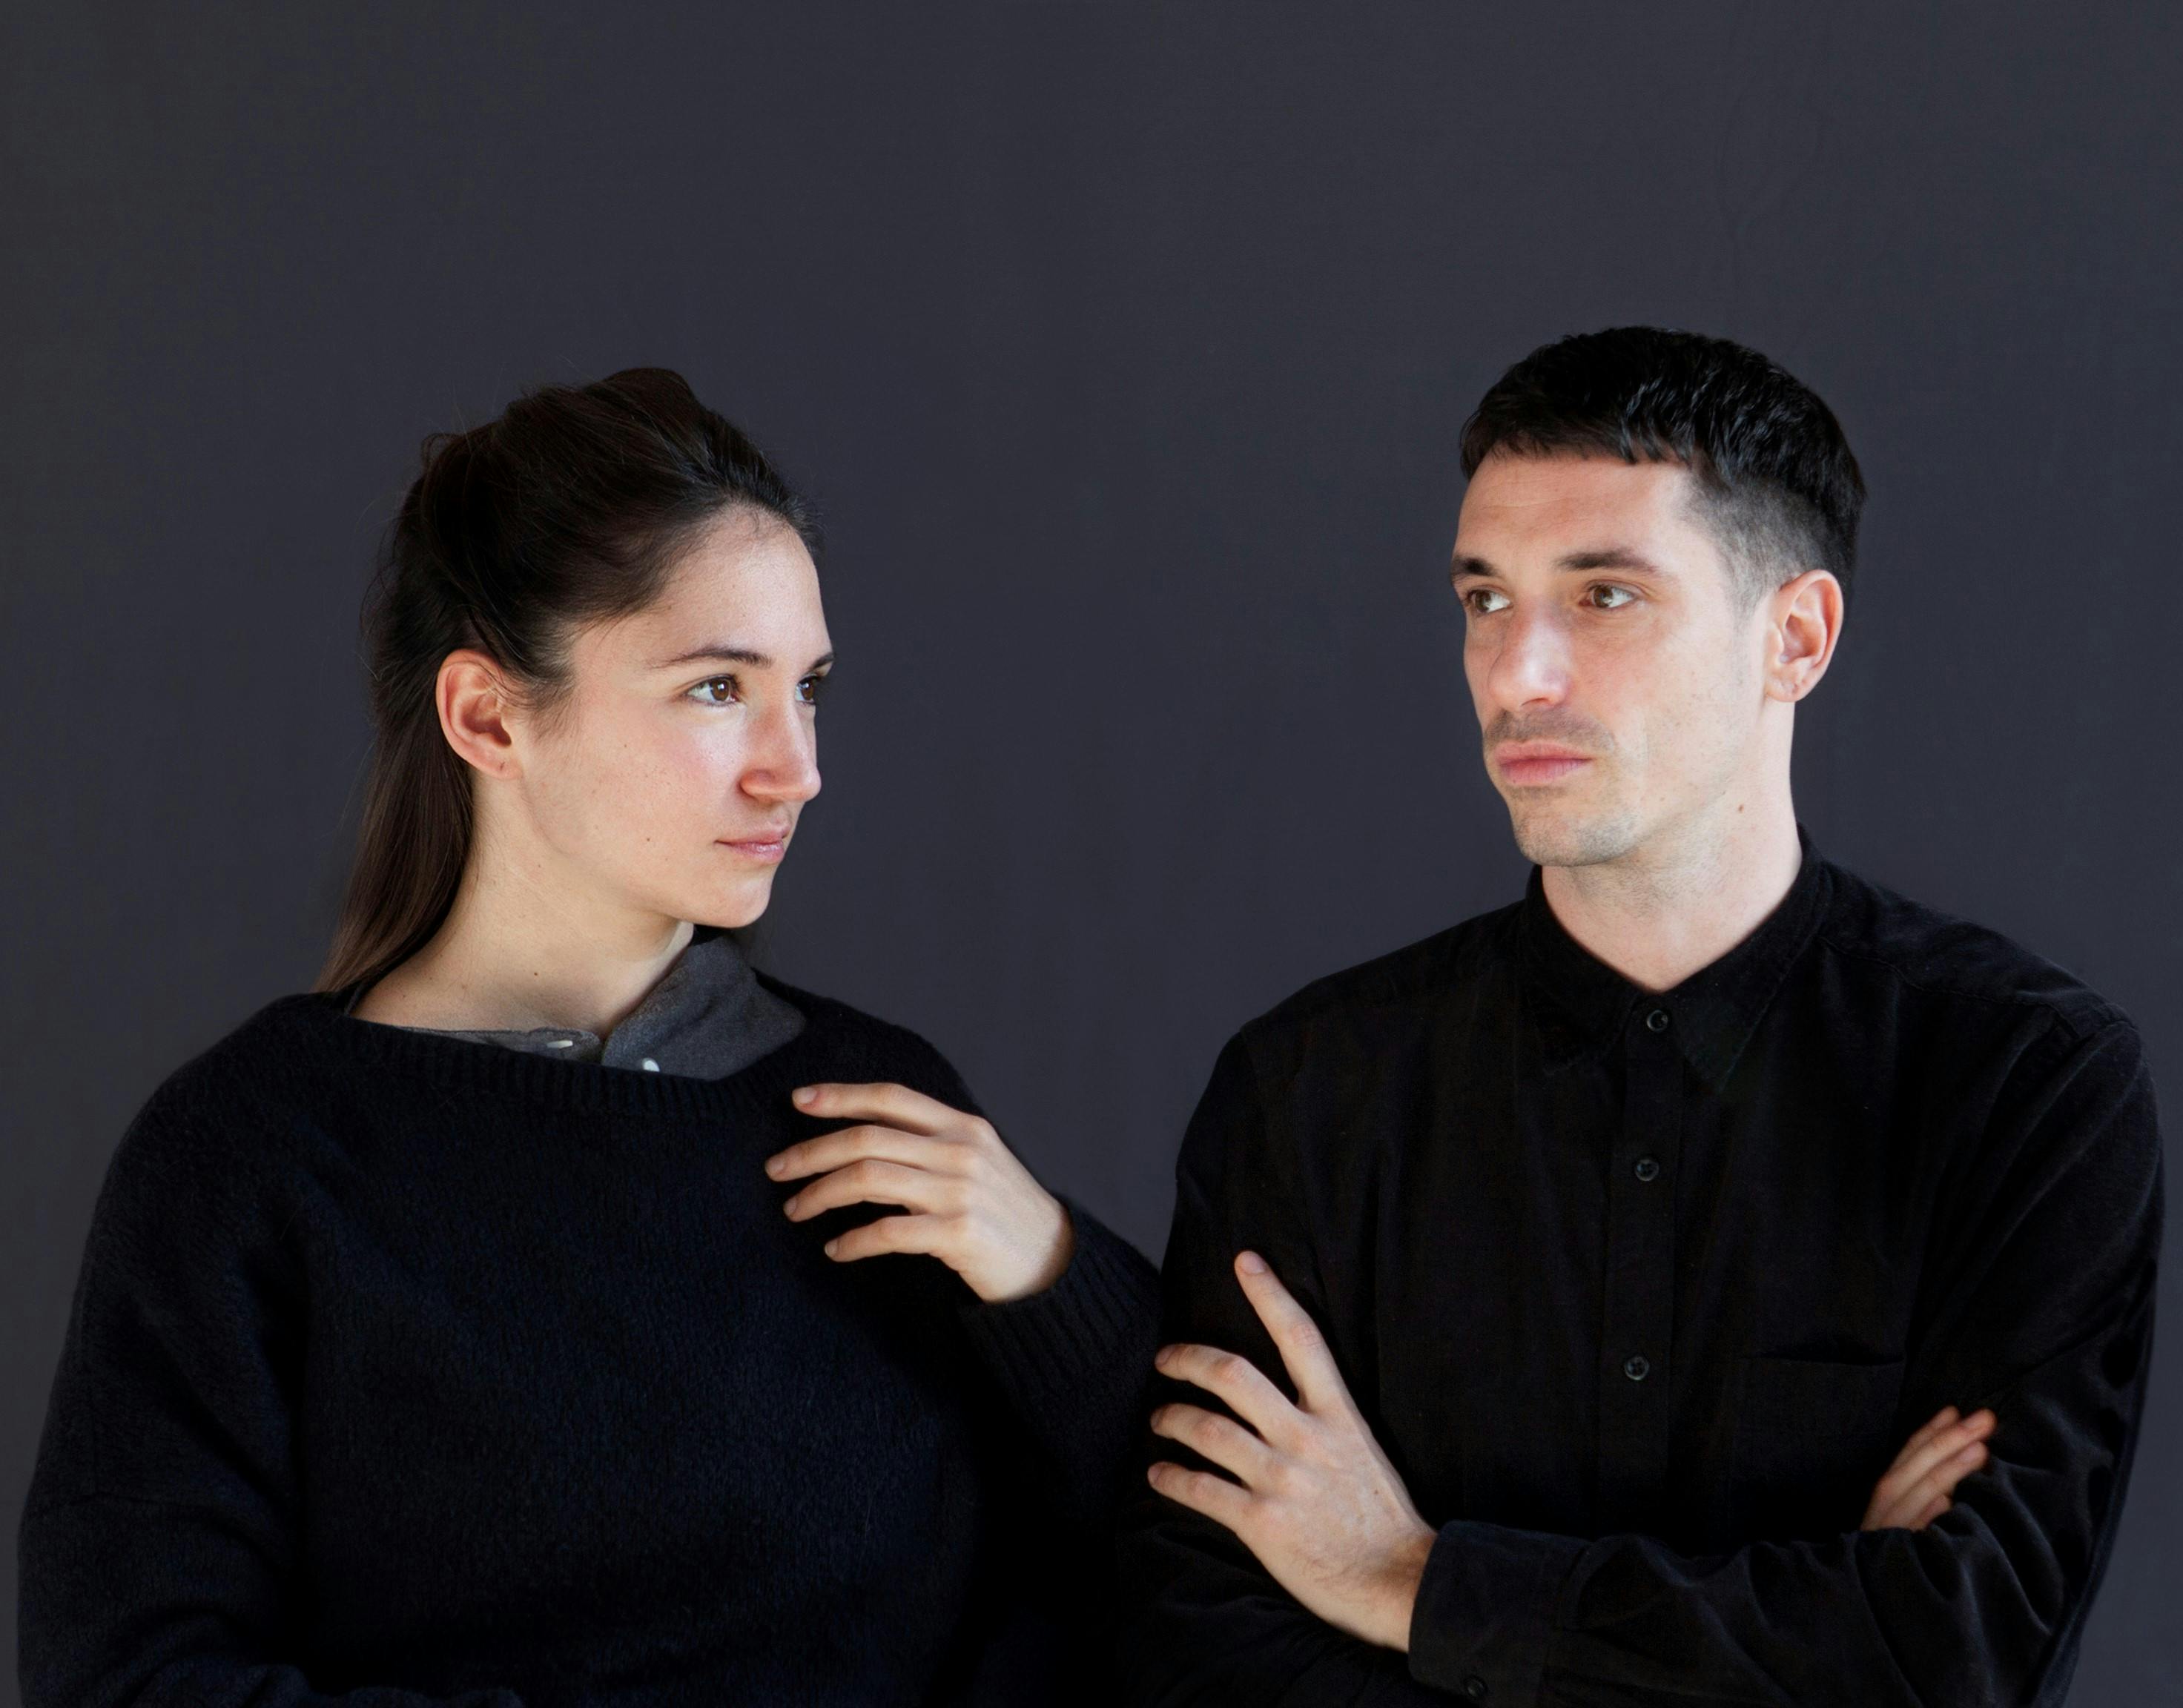 Ginevra Panzetti and Enrico Ticconi portrayed dressed in black 